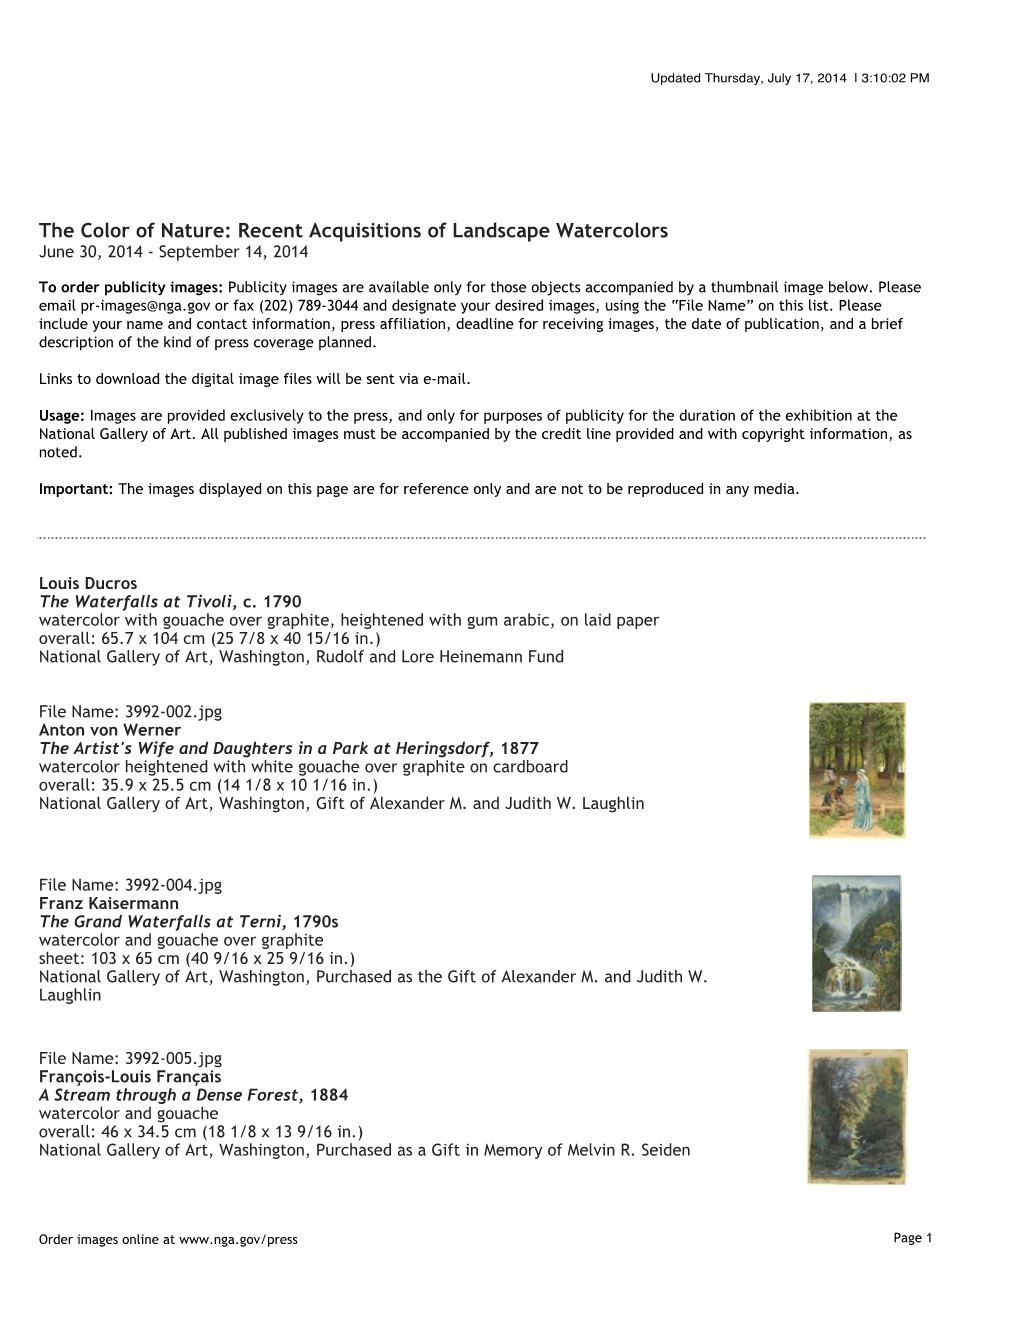 Recent Acquisitions of Landscape Watercolors June 30, 2014 - September 14, 2014